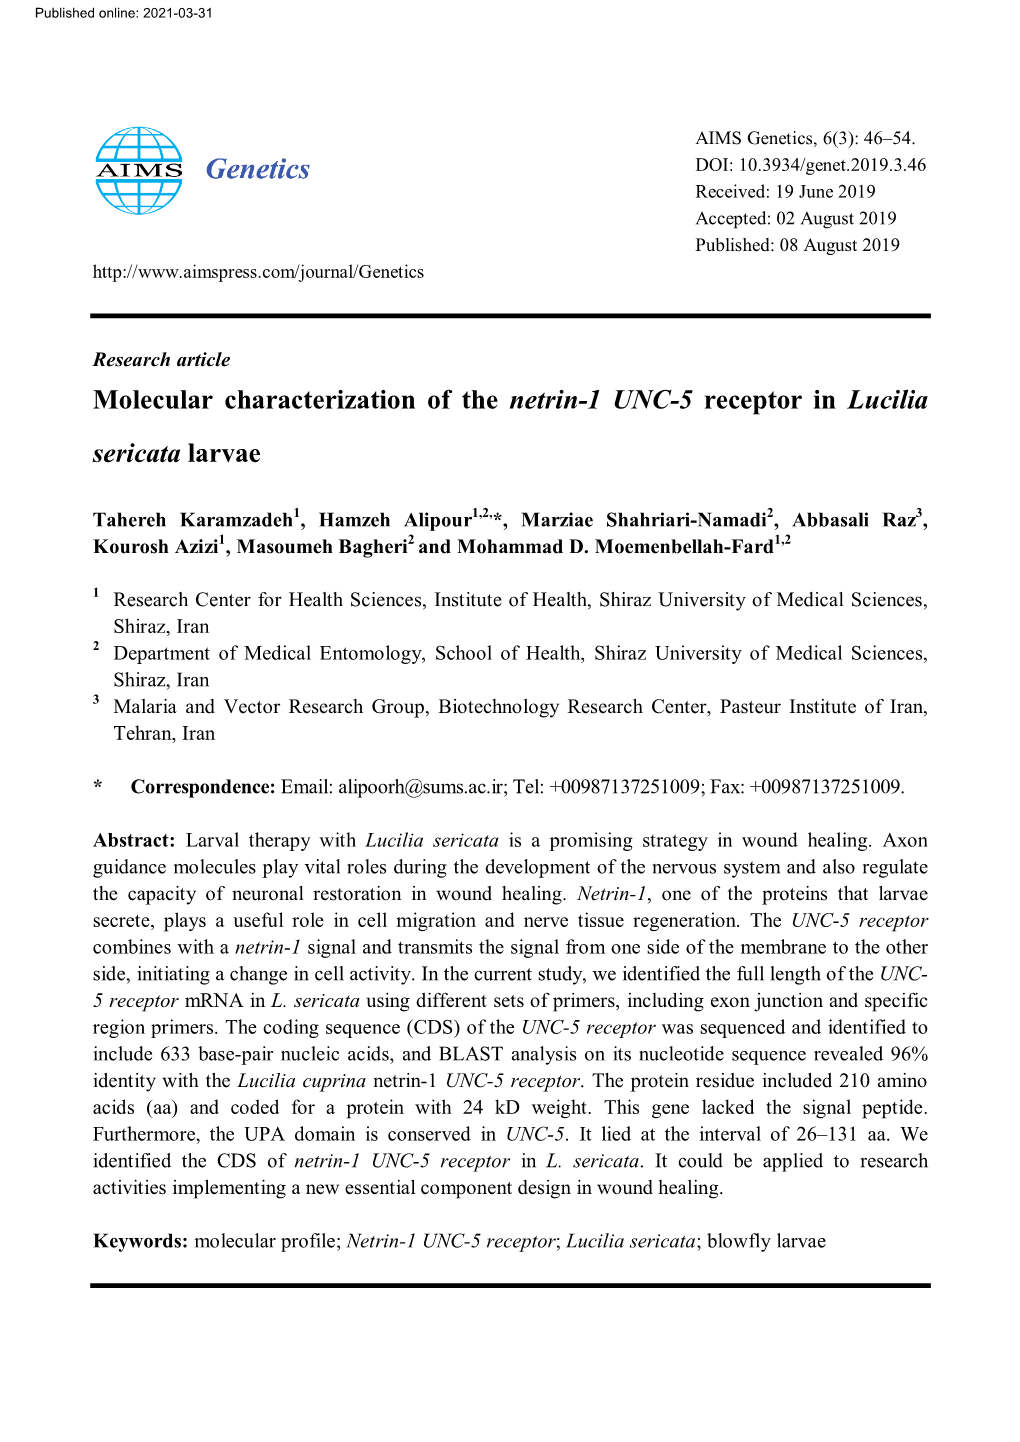 Molecular Characterization of the Netrin-1 UNC-5 Receptor in Lucilia Sericata Larvae